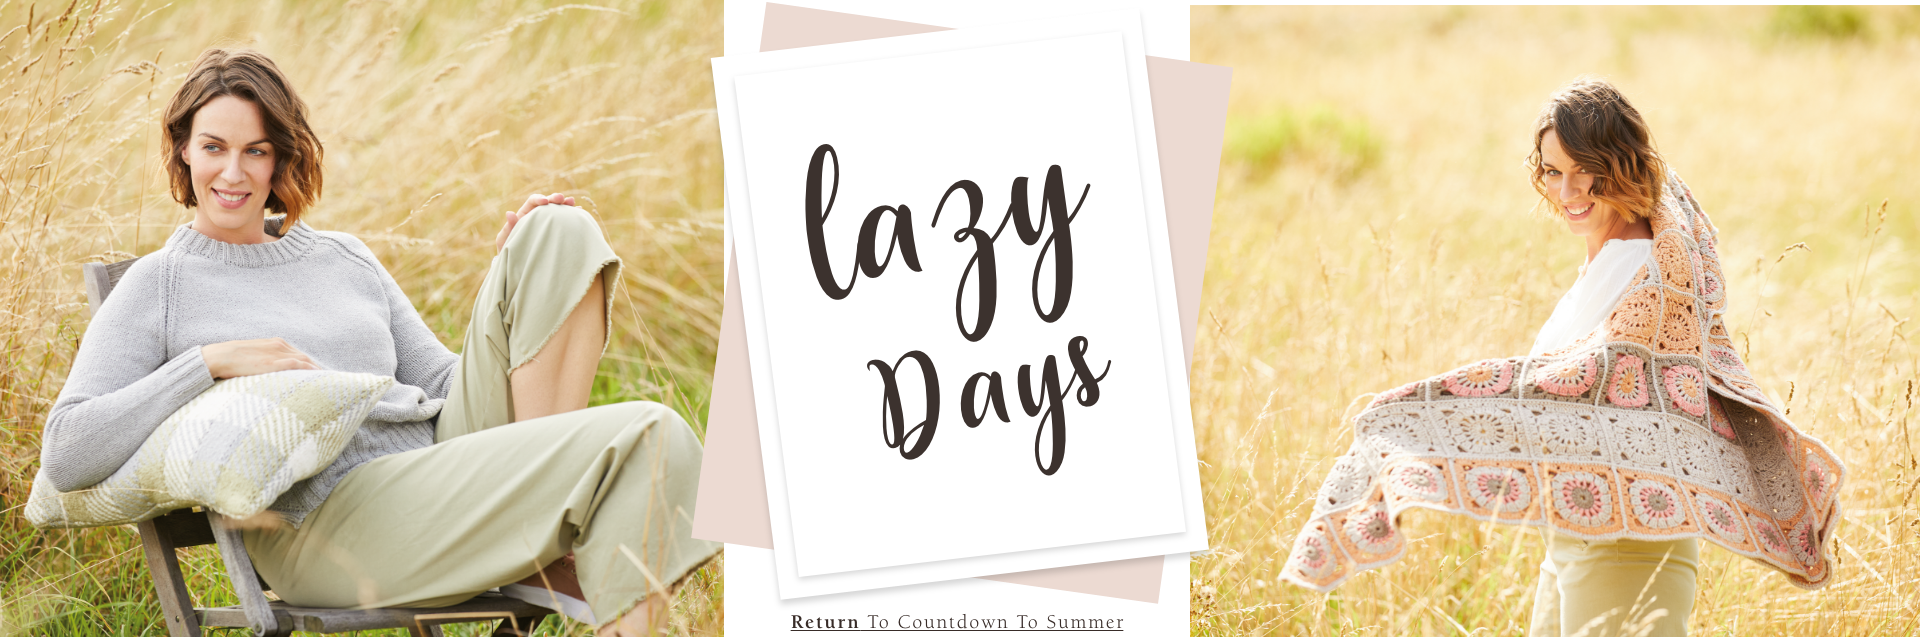 Lazy Days Banner